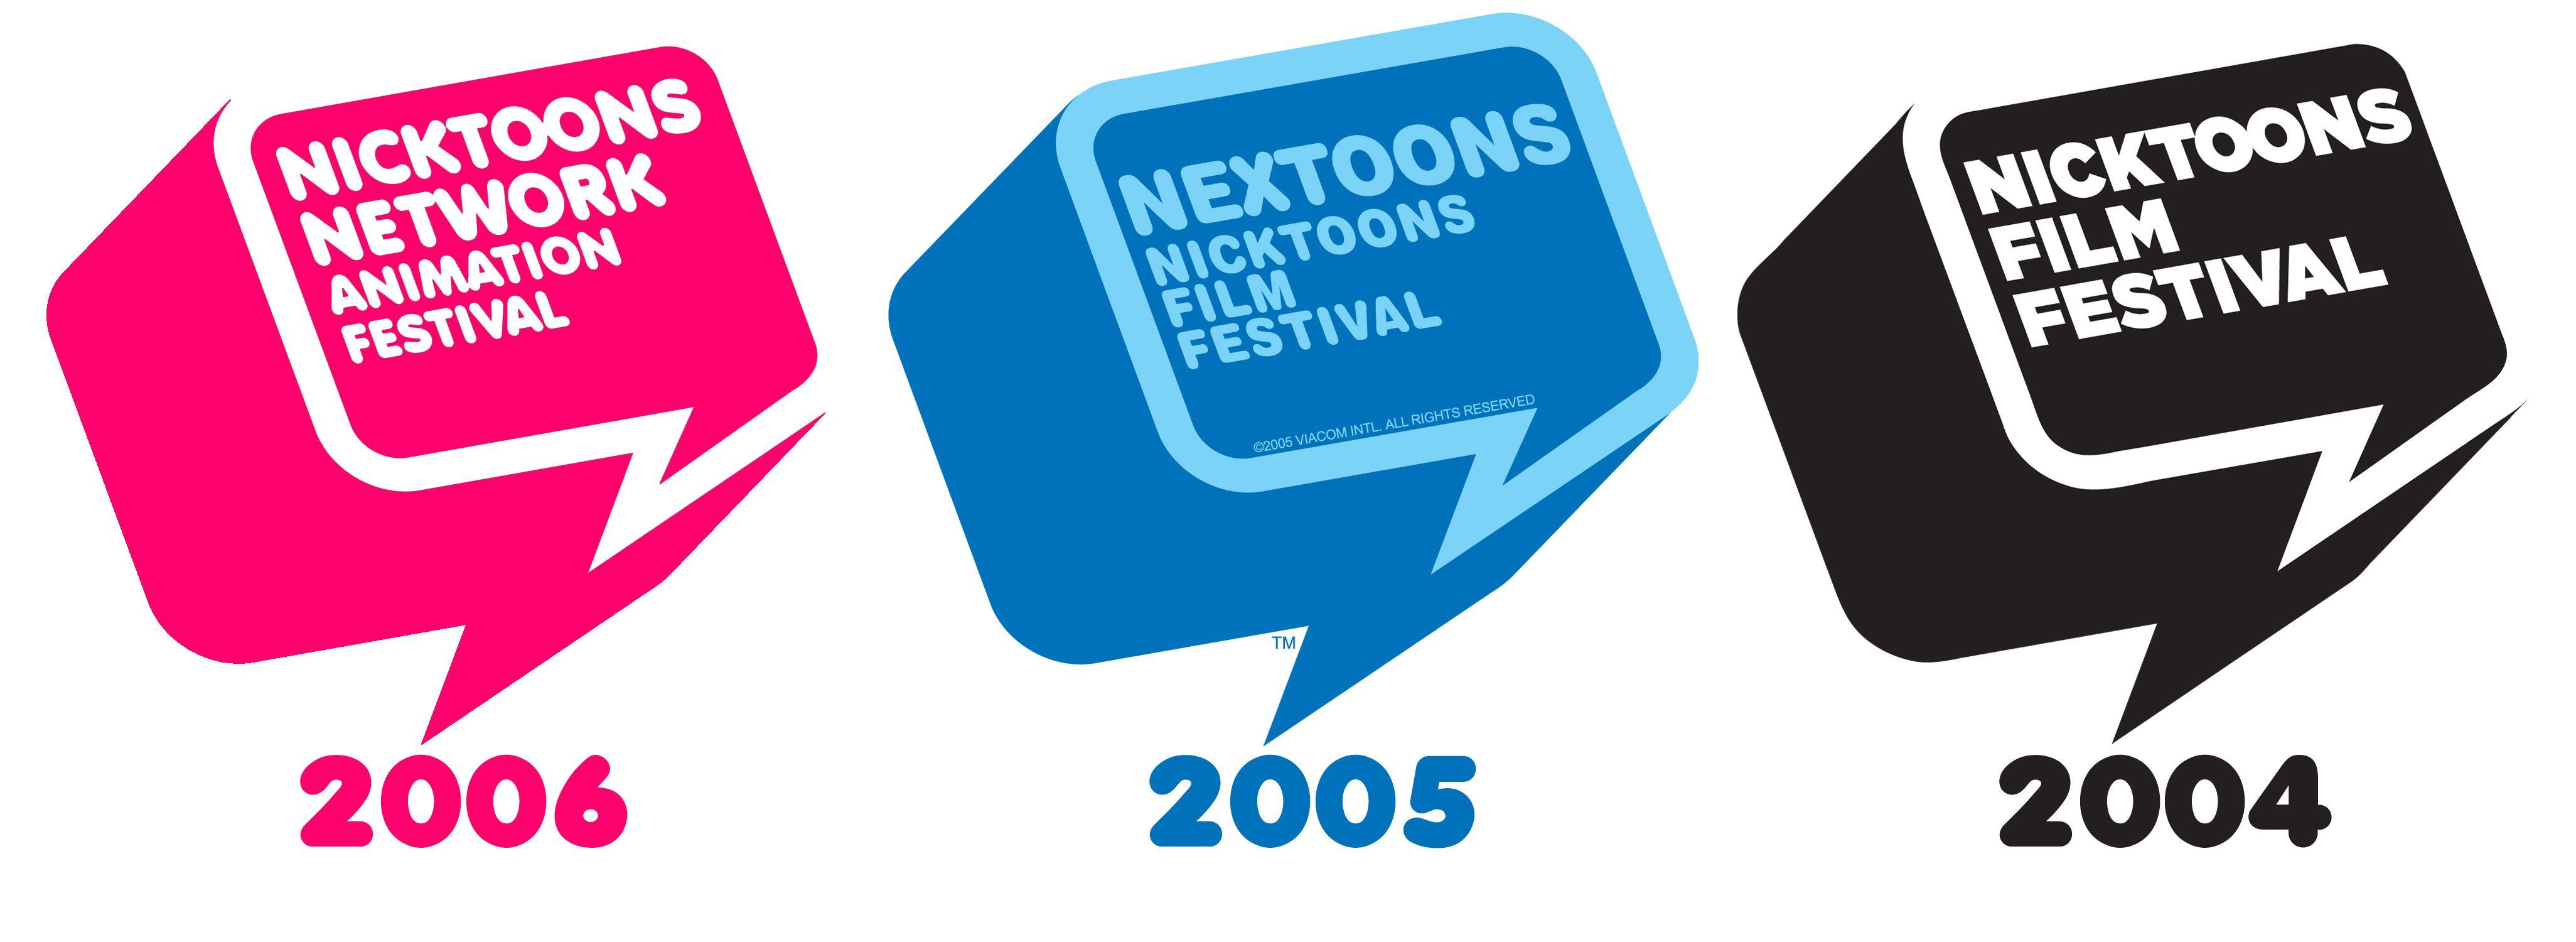 Old Nicktoons Network Logo - Frederator Studios Blogs | The Nicktoons Network Animation Festival ...